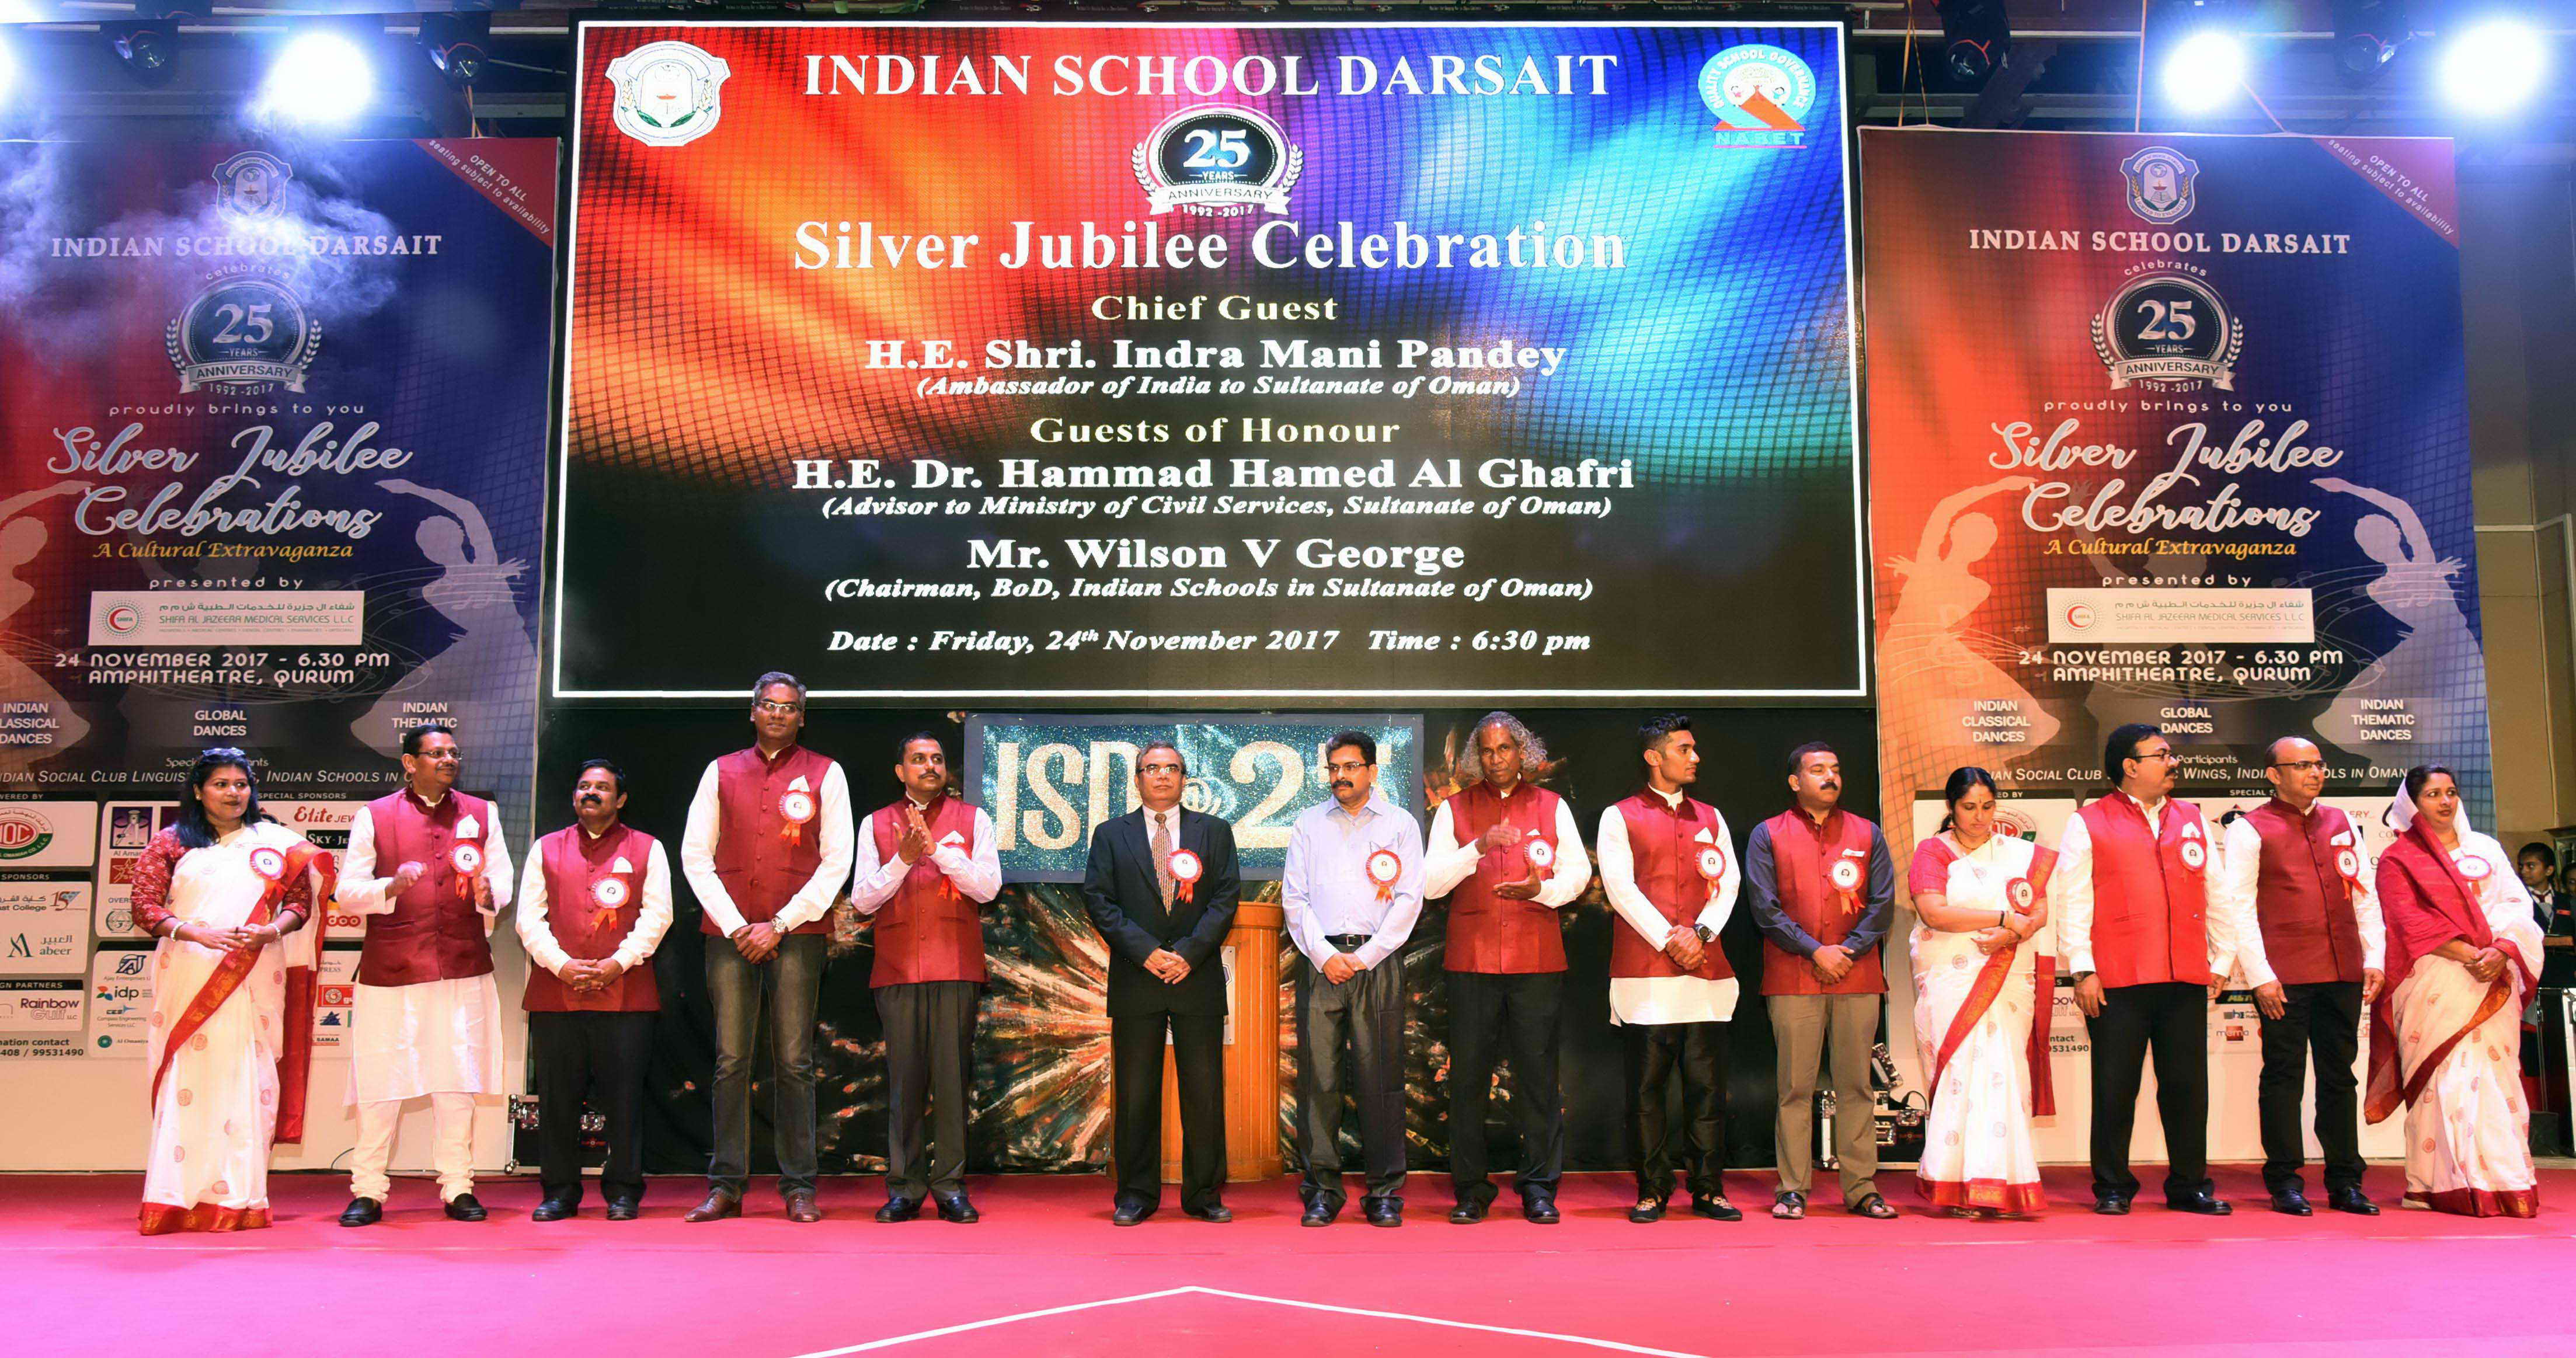 Indian School Darsait holds Silver Jubilee celebrations